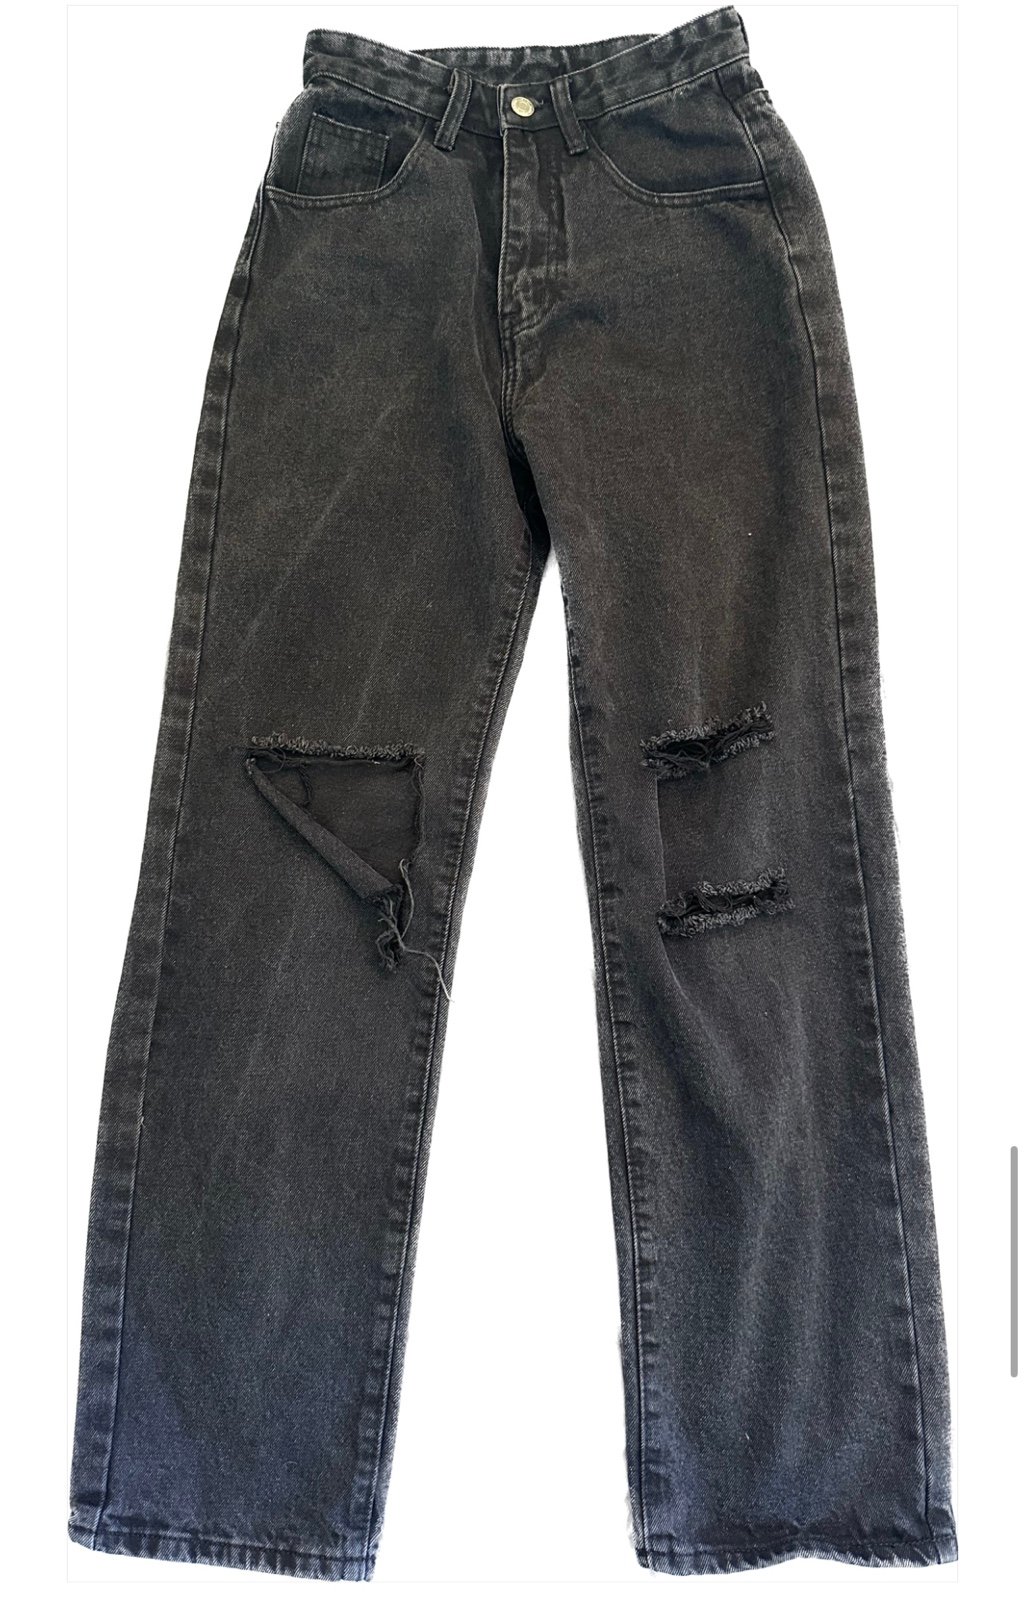 Buy SHEIN black ripped baggy jeans Oxt9jJUfm Store Onli